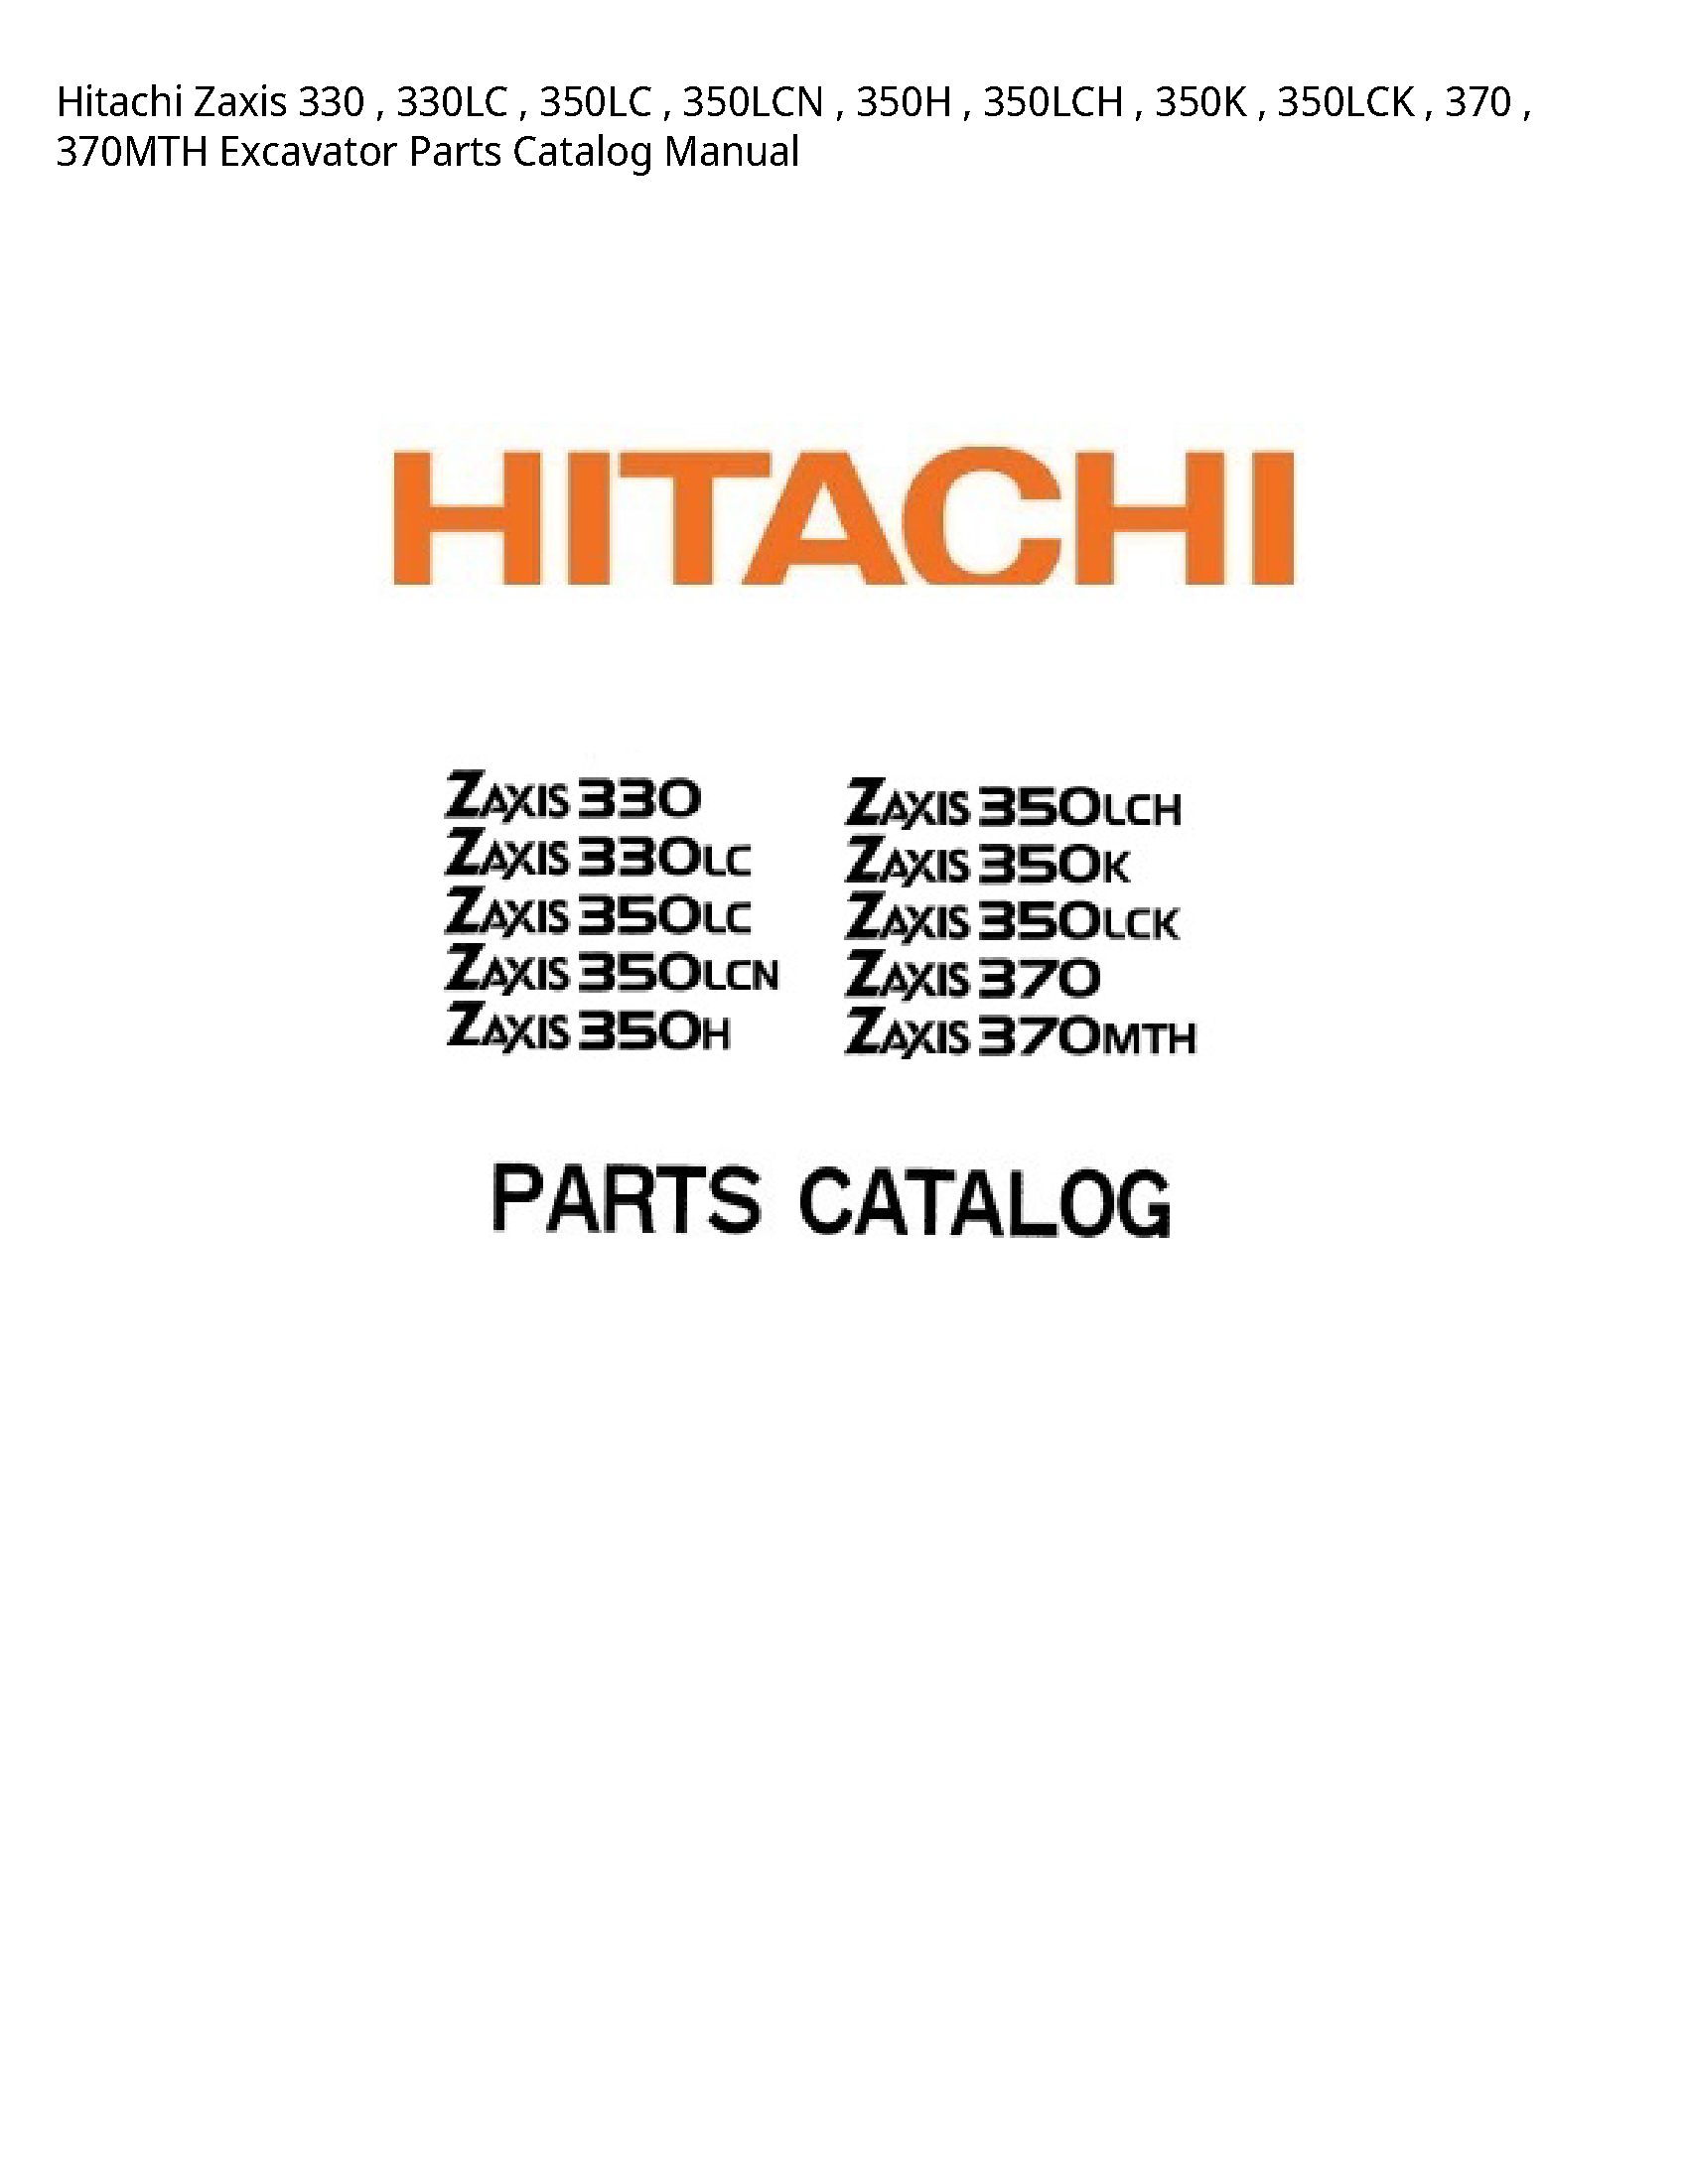 Hitachi 330 Zaxis Excavator Parts Catalog manual